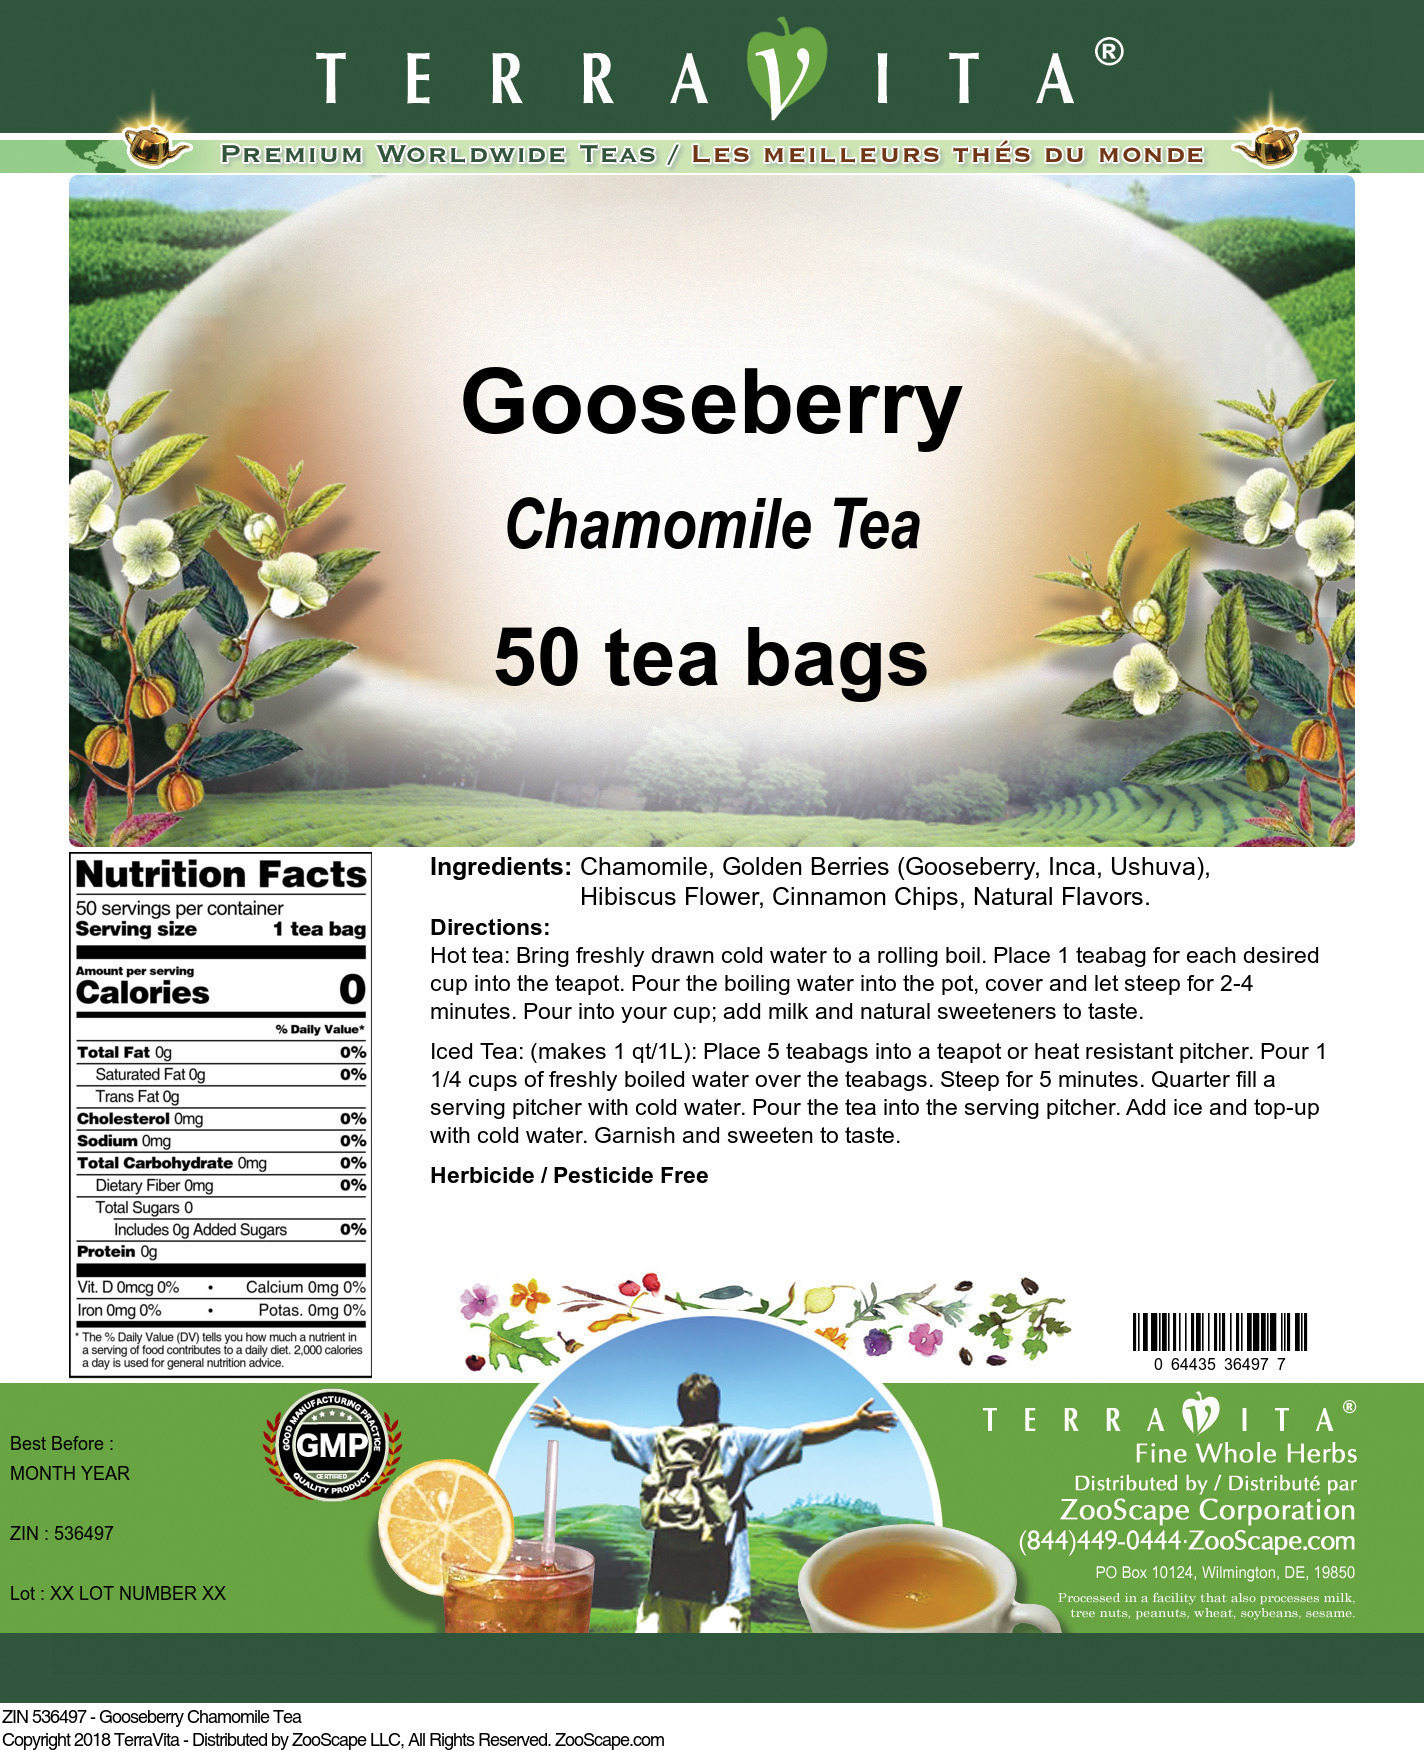 Gooseberry Chamomile Tea - Label